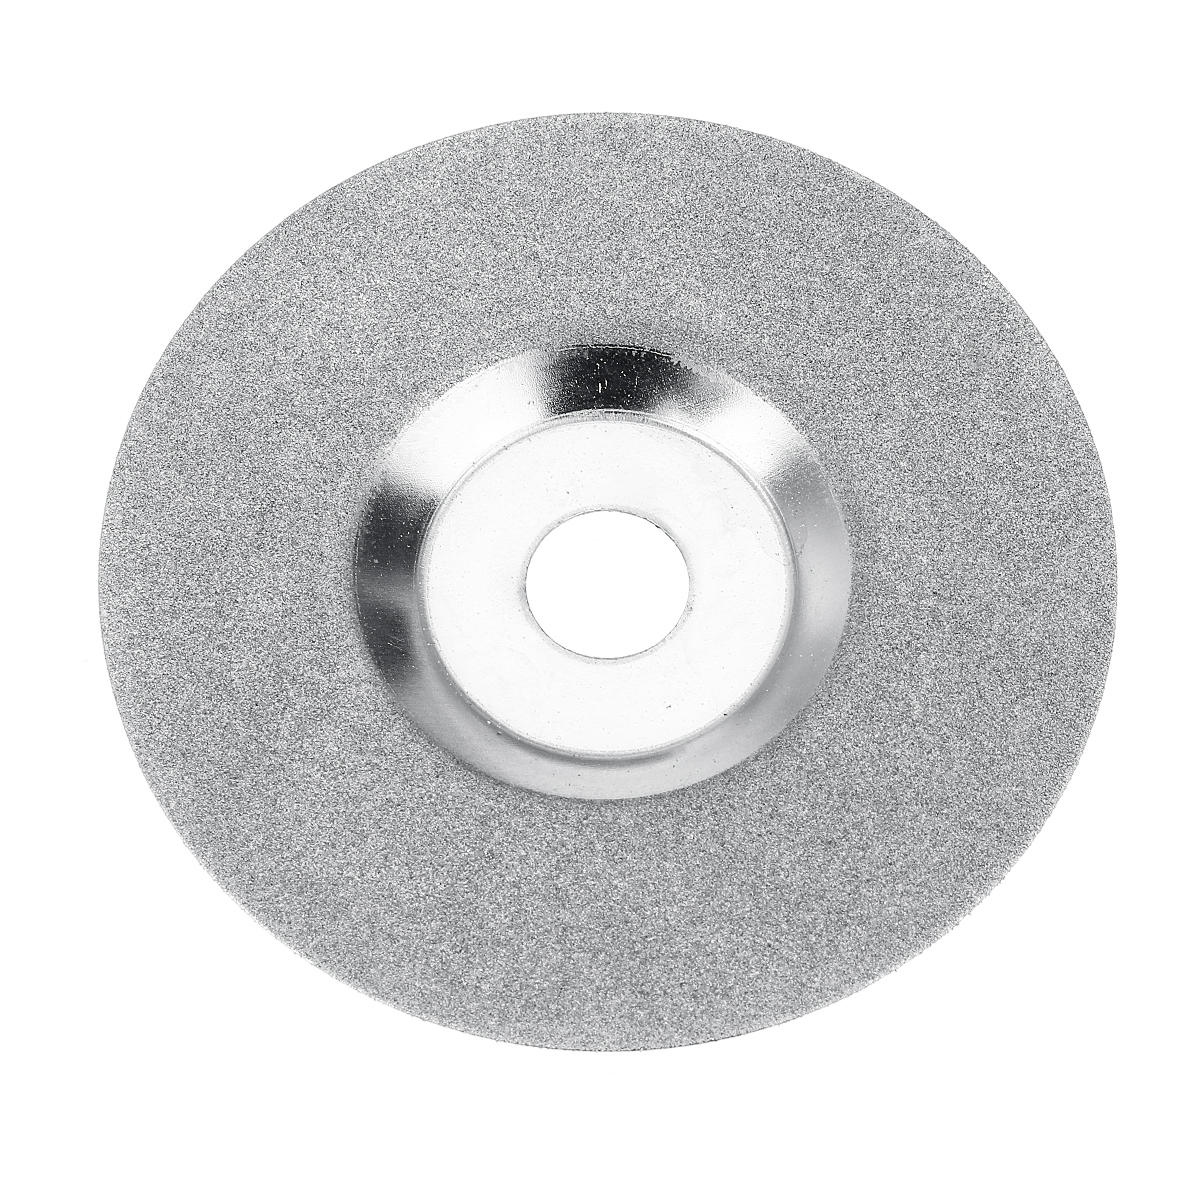 4/" Glass Ceramic Granite Diamond Saw Blade Disc Cutting Wheel For Angle Grinder